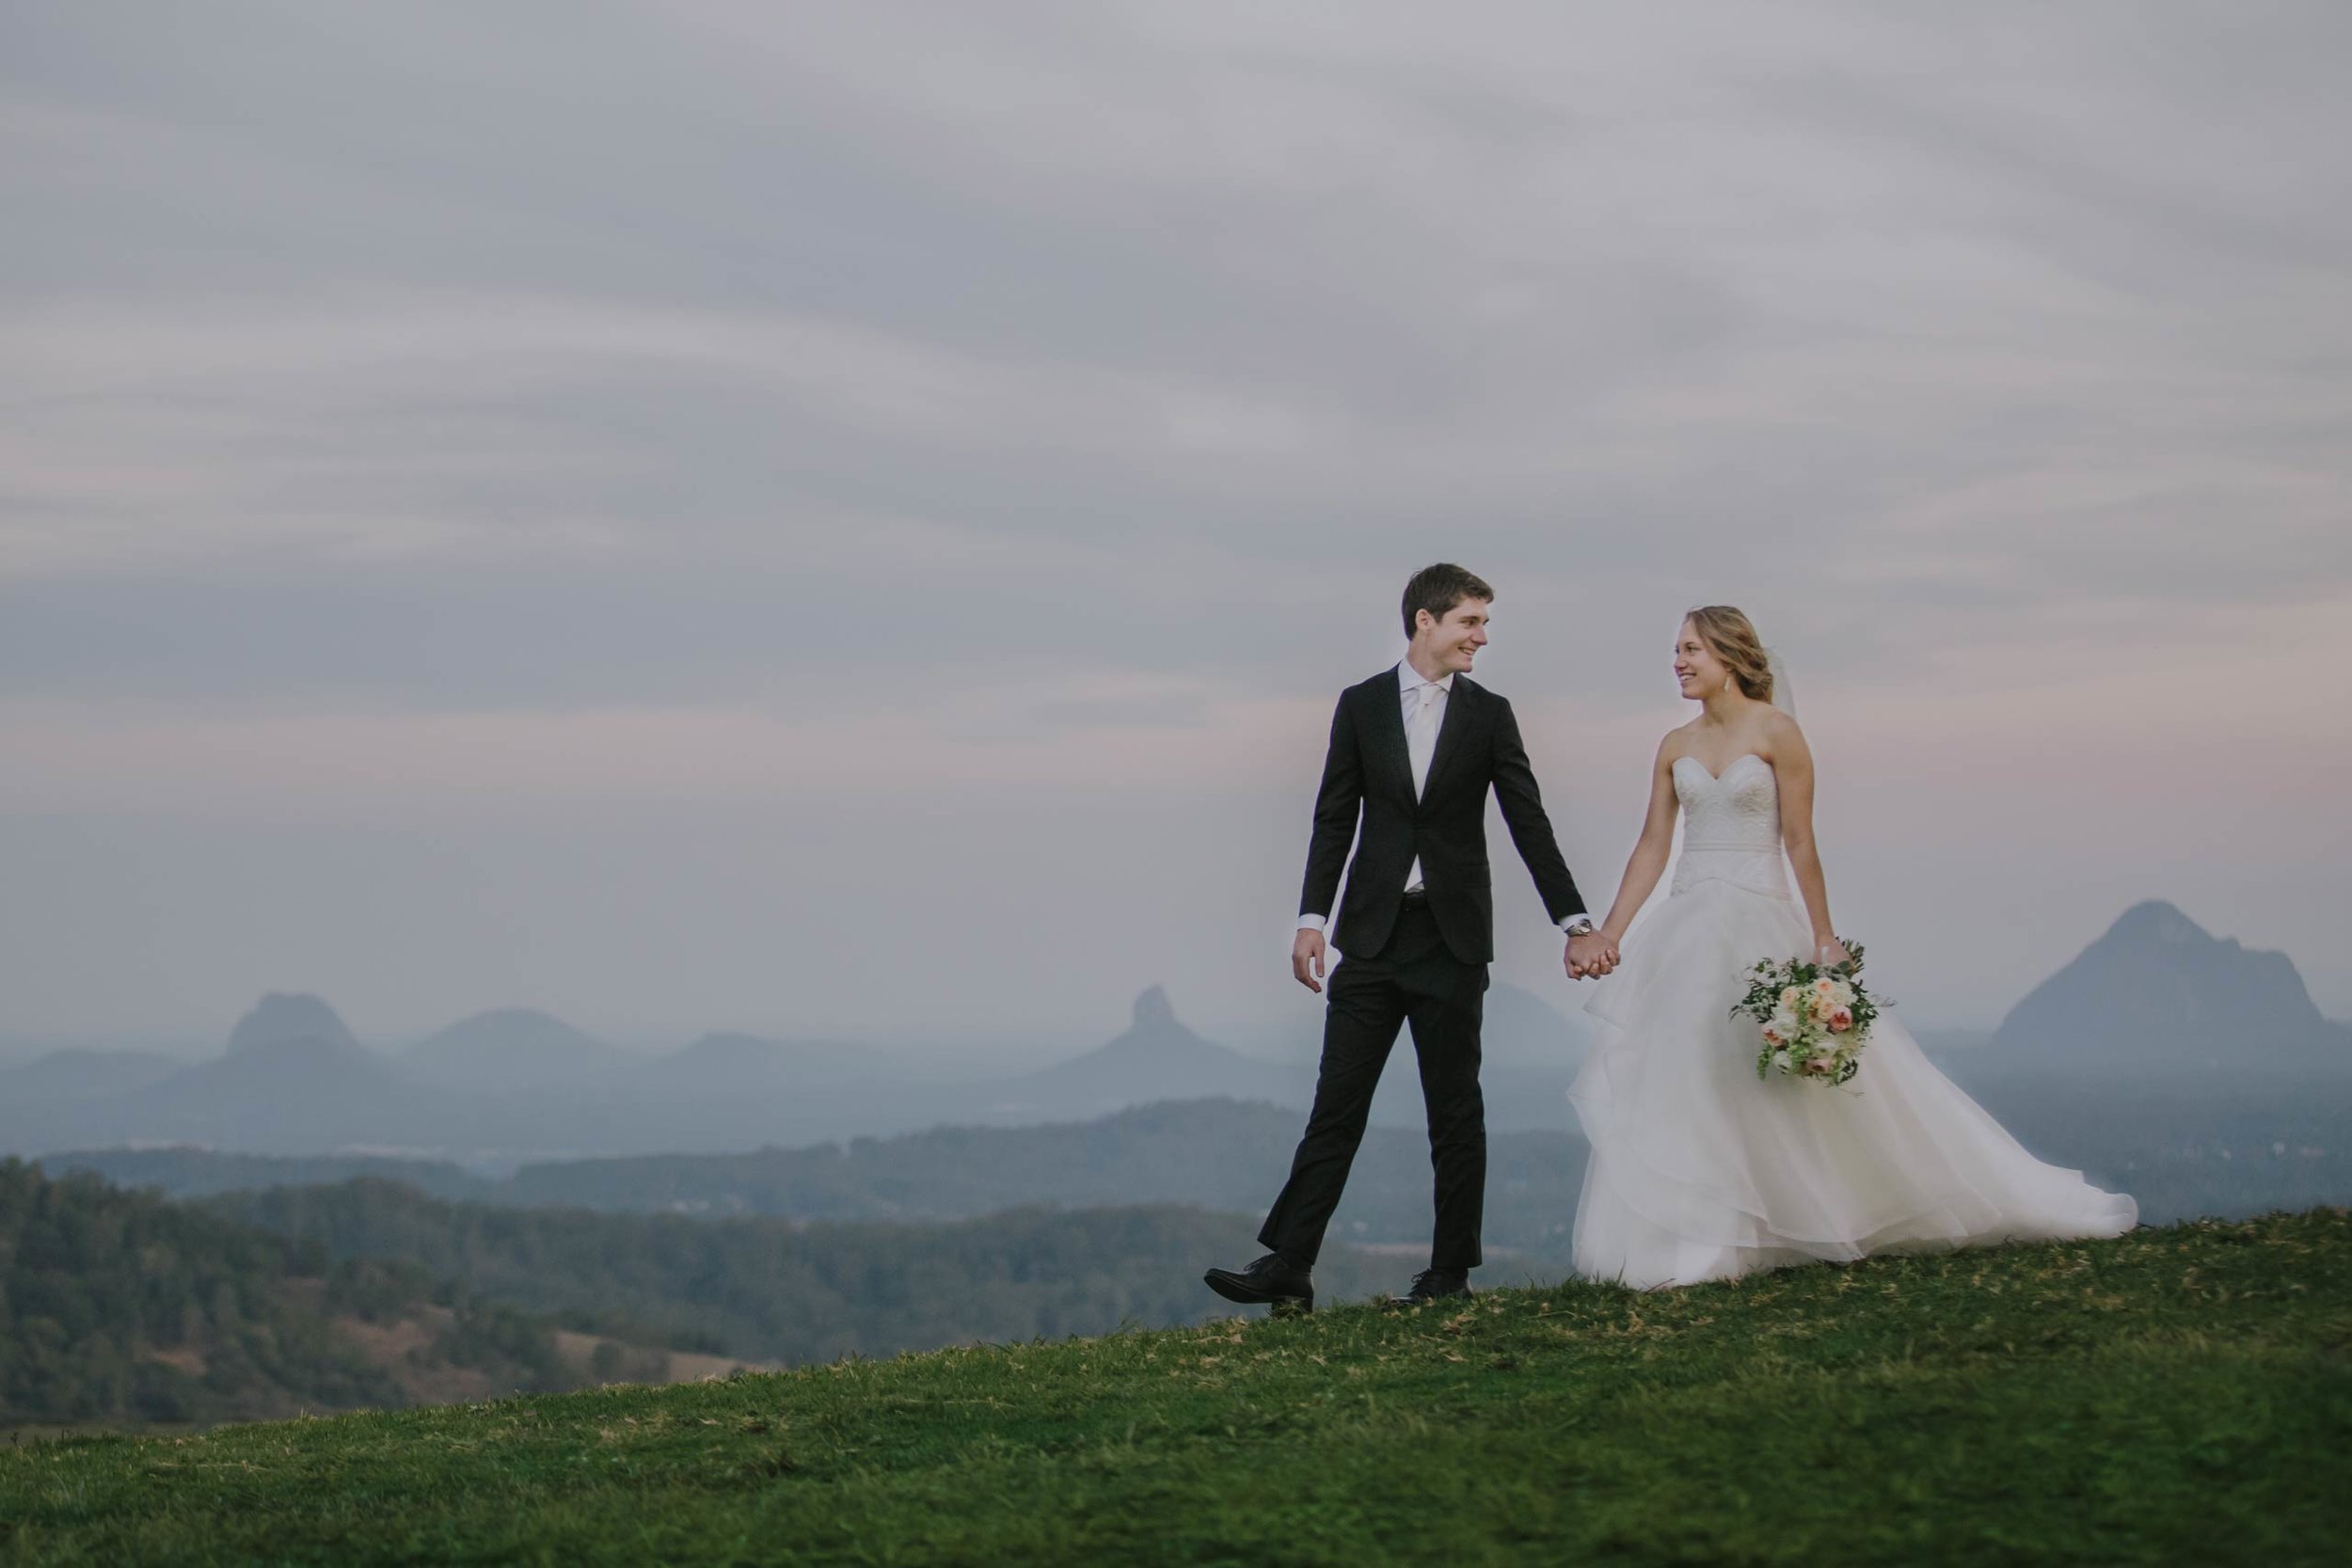 Maleny Retreat Destination Wedding Photographer - Top Sunshine Coast, Queensland, Australian Blog